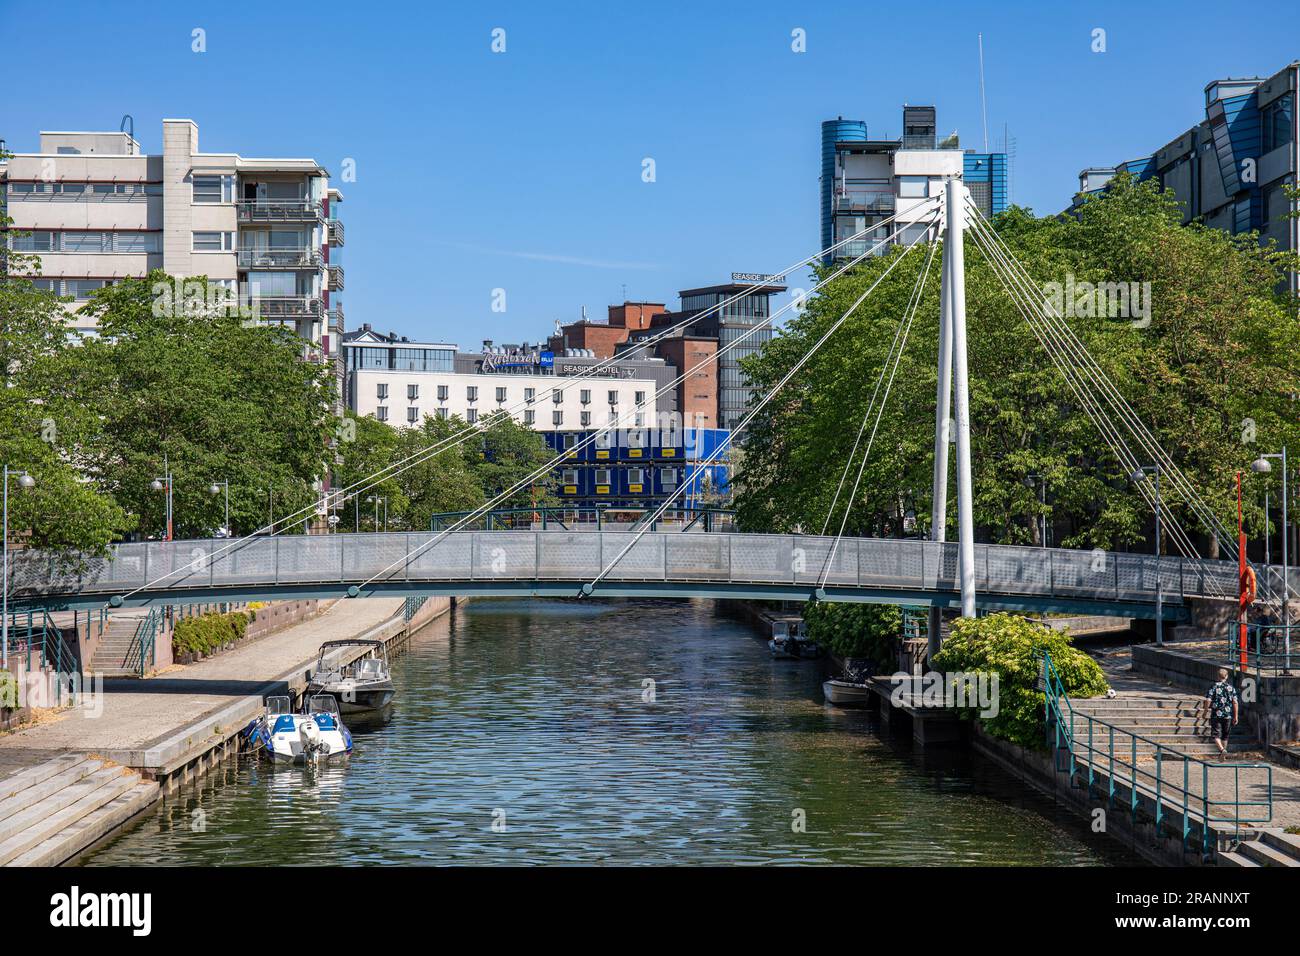 Ruoholahdenpuiston kevyen liikenteen silta, eine leichte Verkehrsbrücke über den Ruoholahti-Kanal an einem sonnigen Sommertag in Helsinki, Finnland Stockfoto